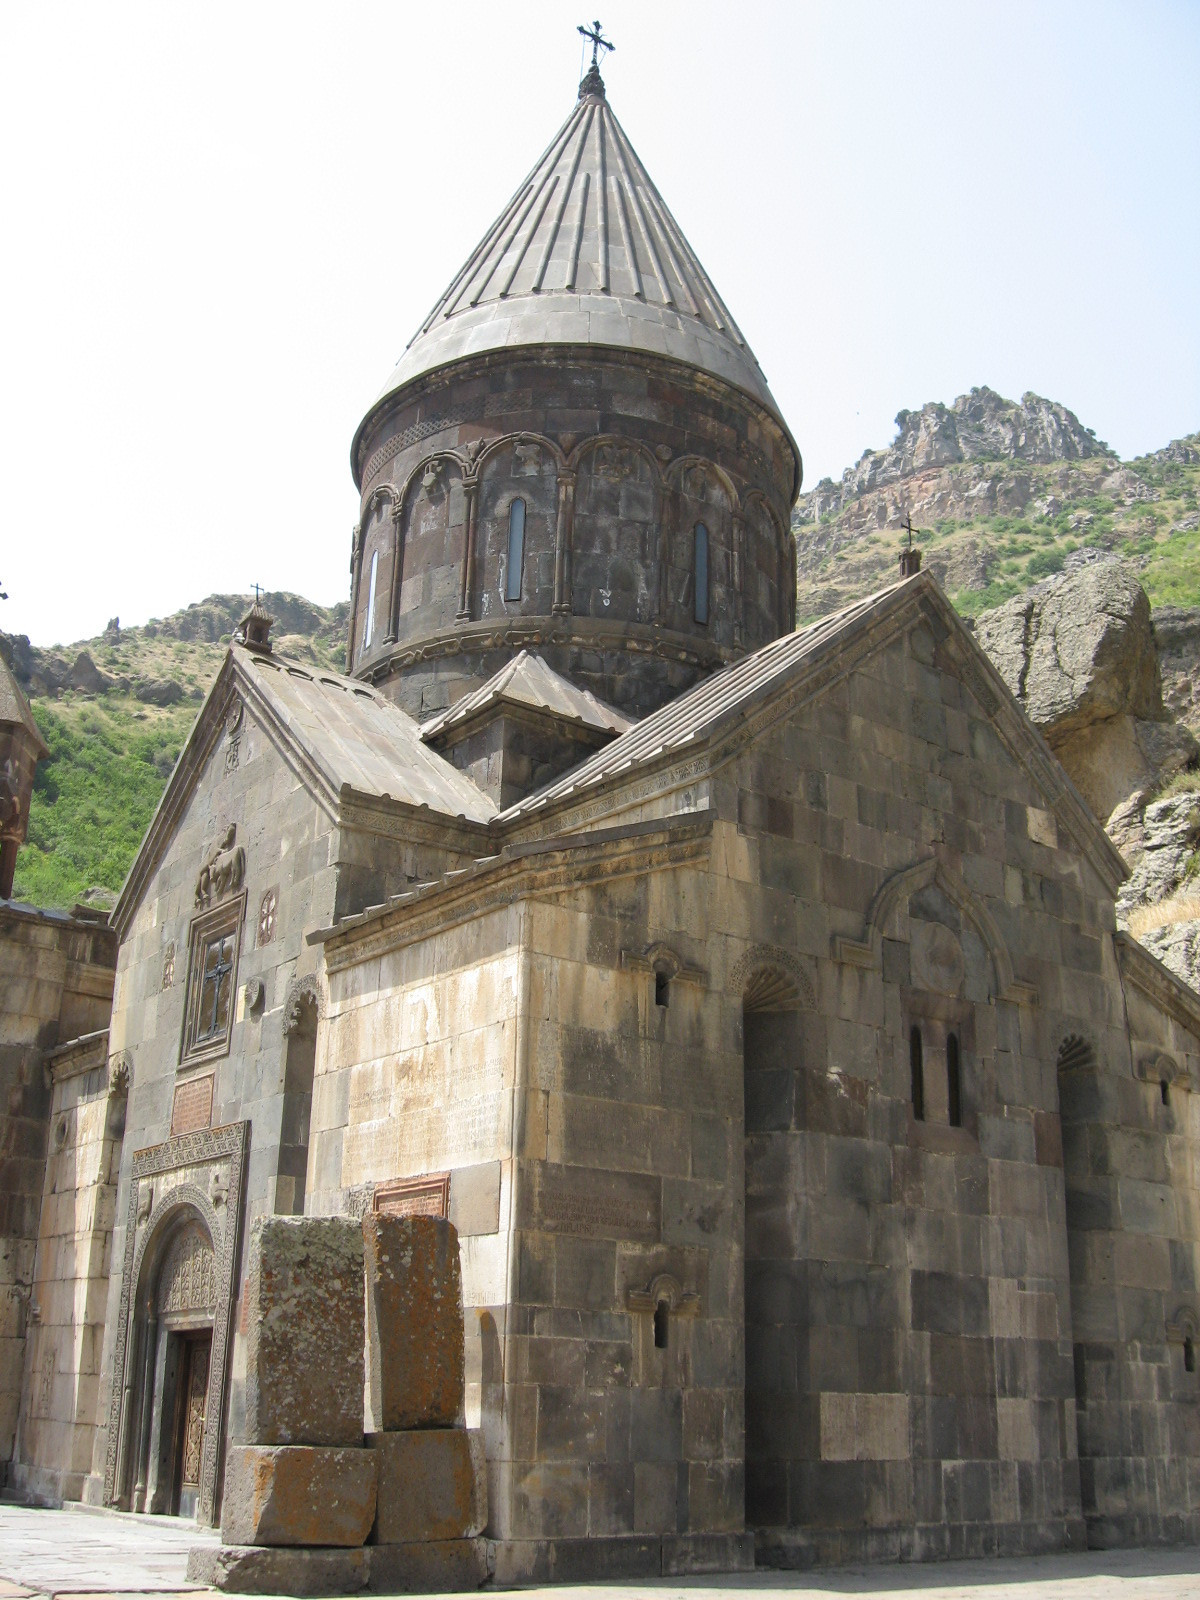 Geghard monastery (Armenia)